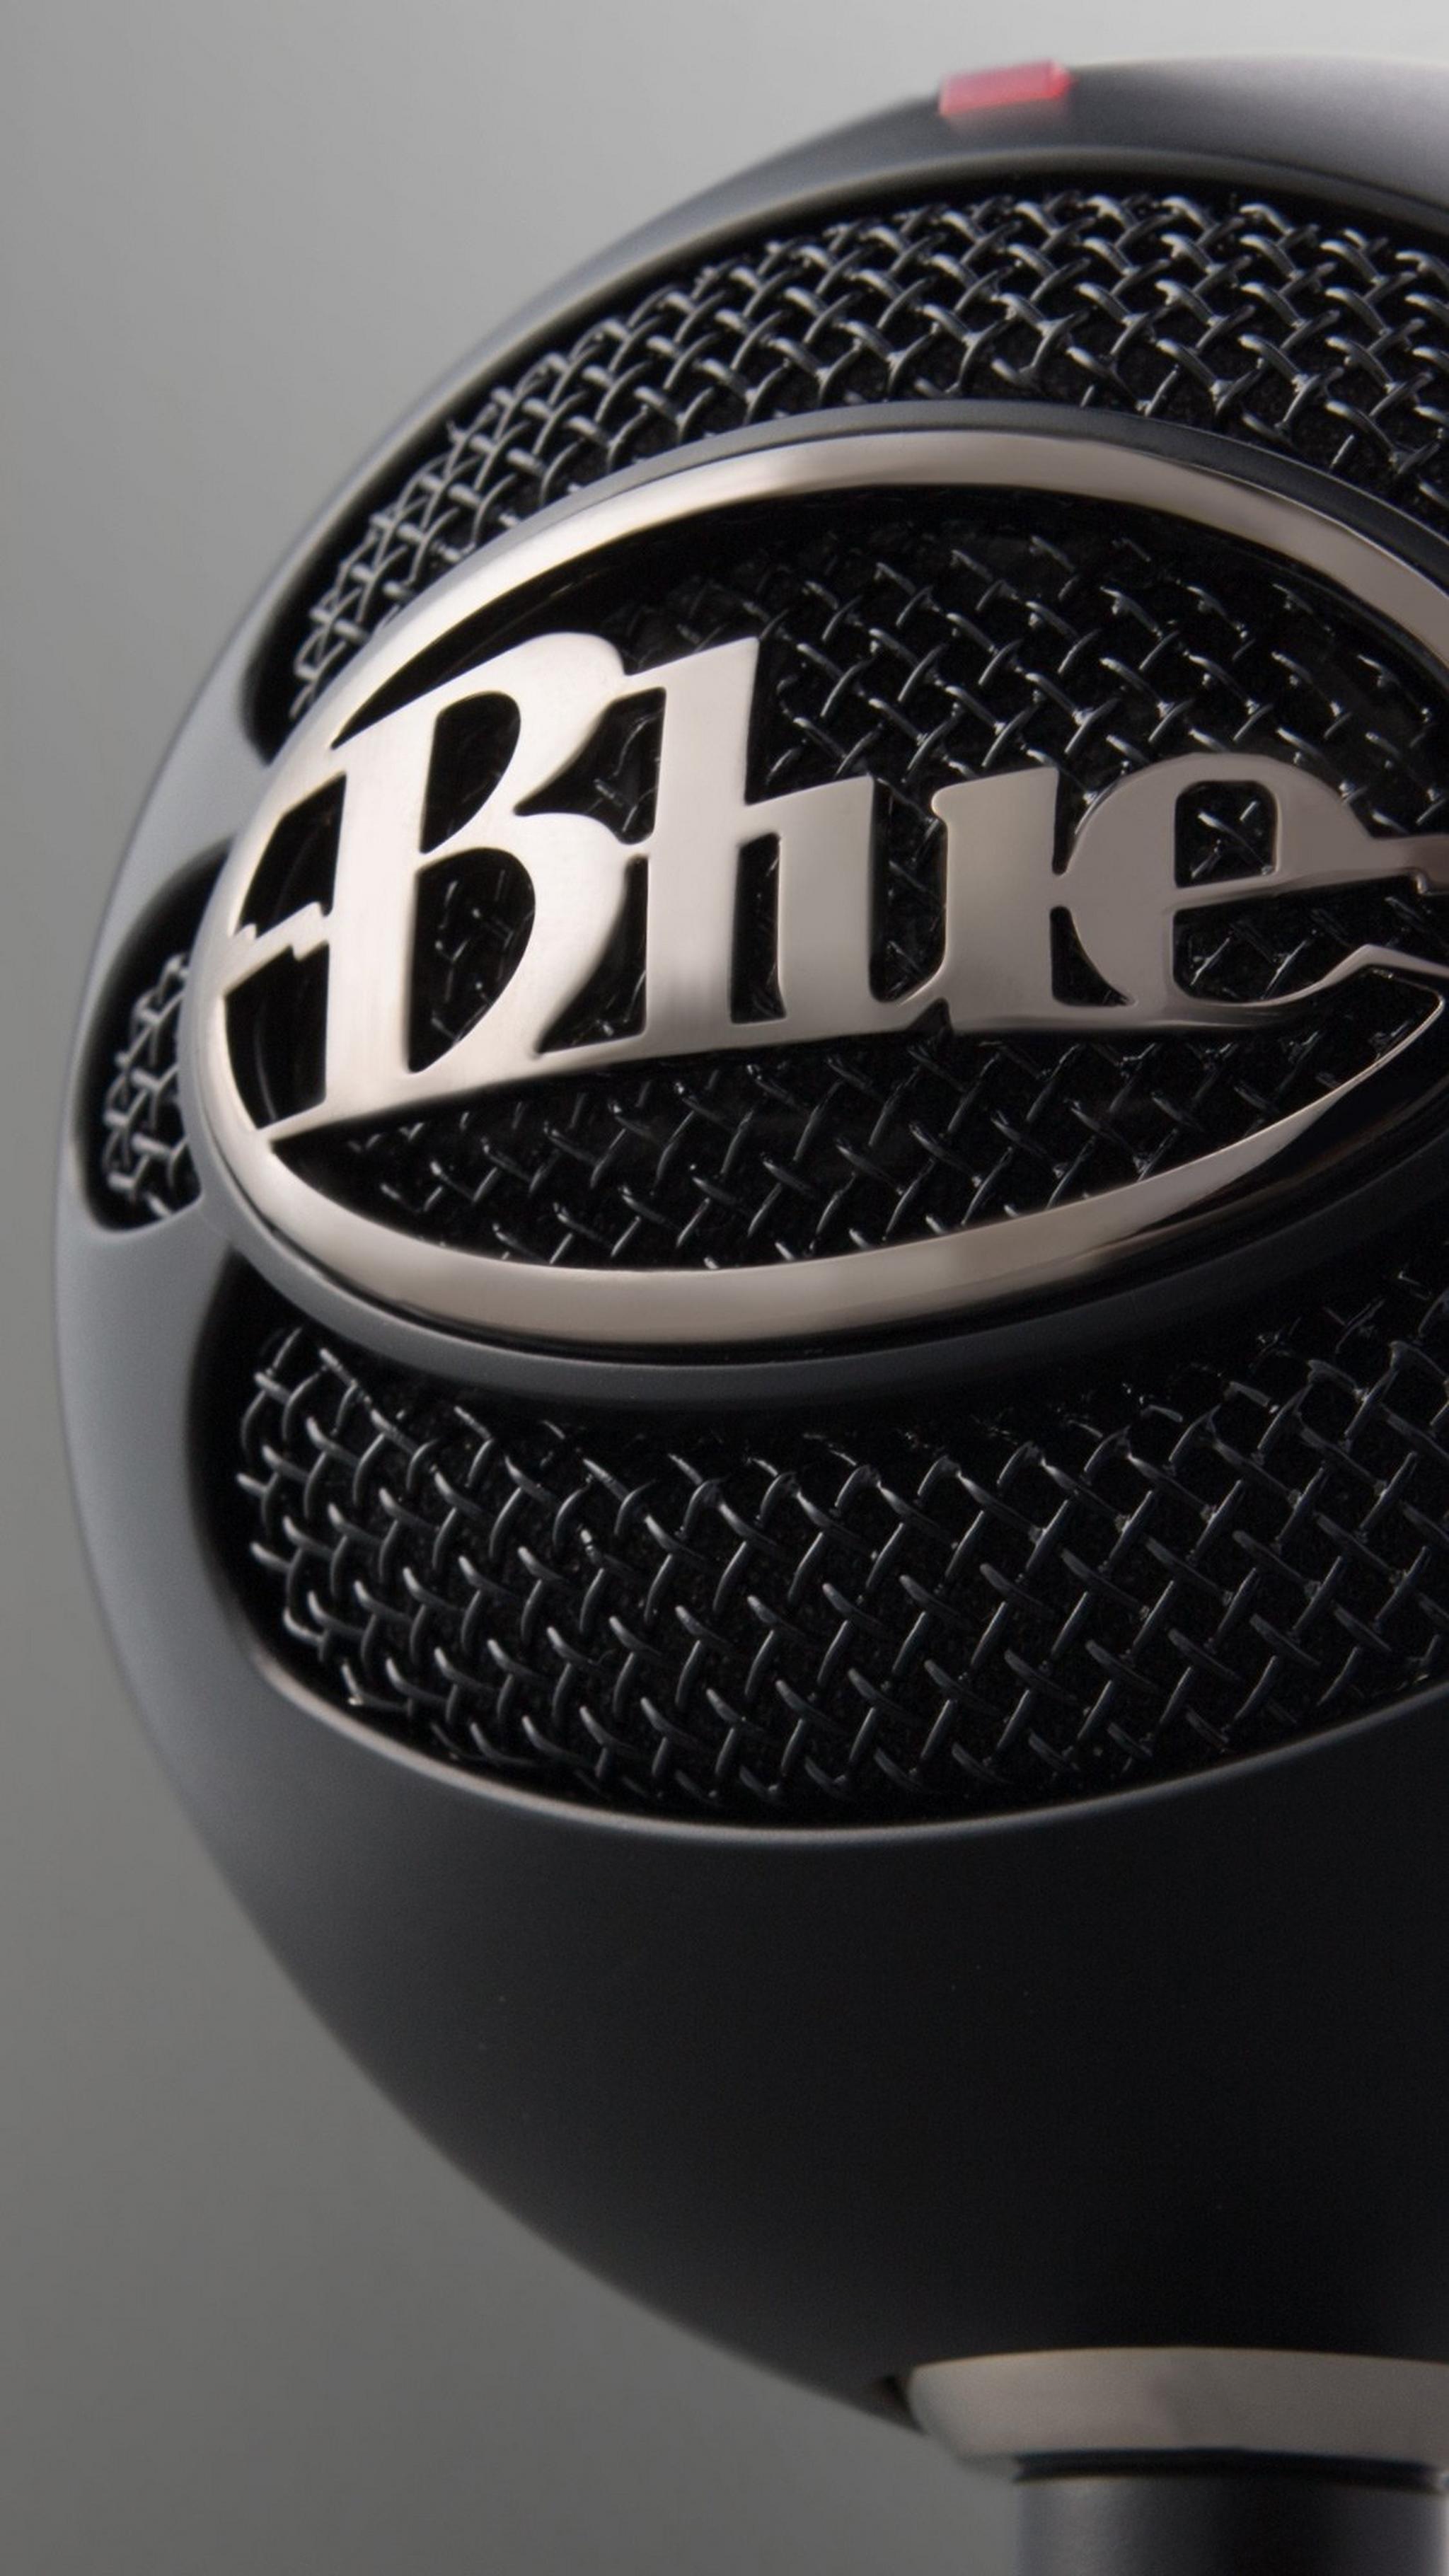 BLUE Yeti Snowball iCE USB Microphone - Black